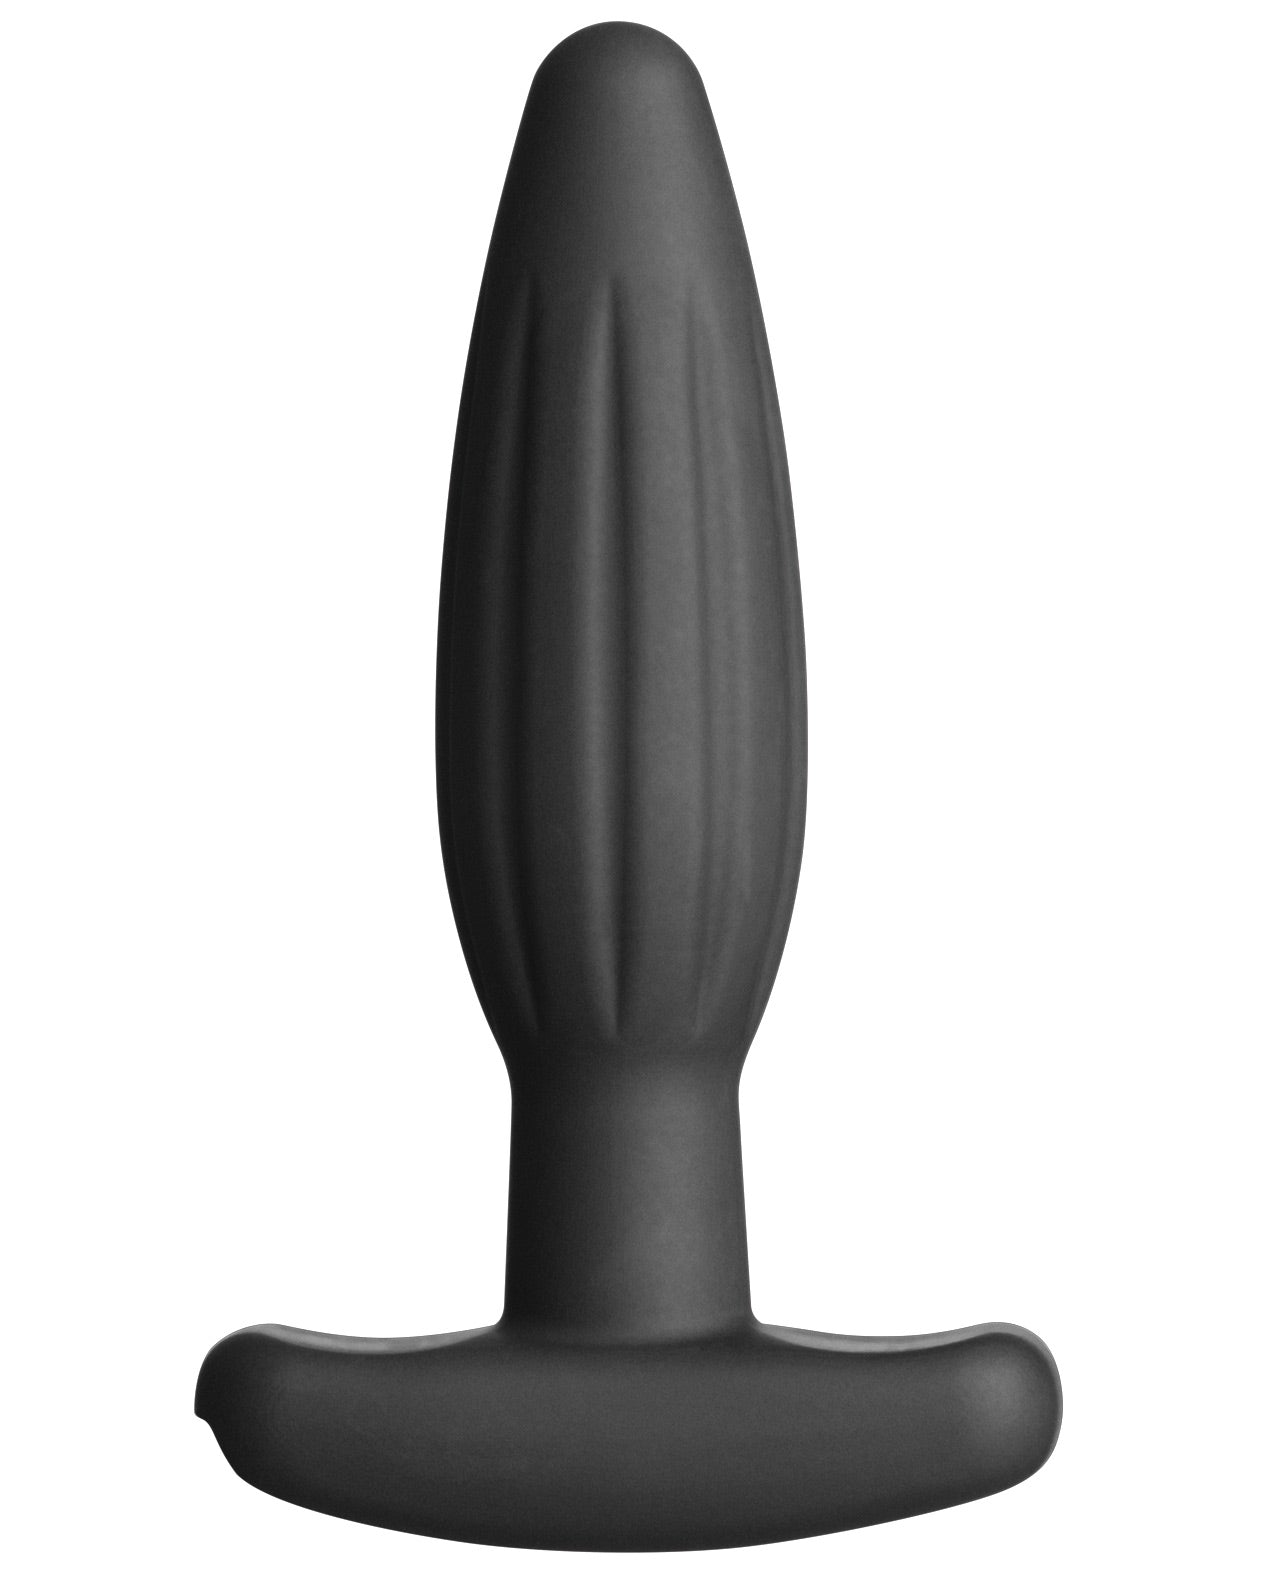 Electrastim Silicone Noir Rocker Butt Plug - Small - LUST Depot